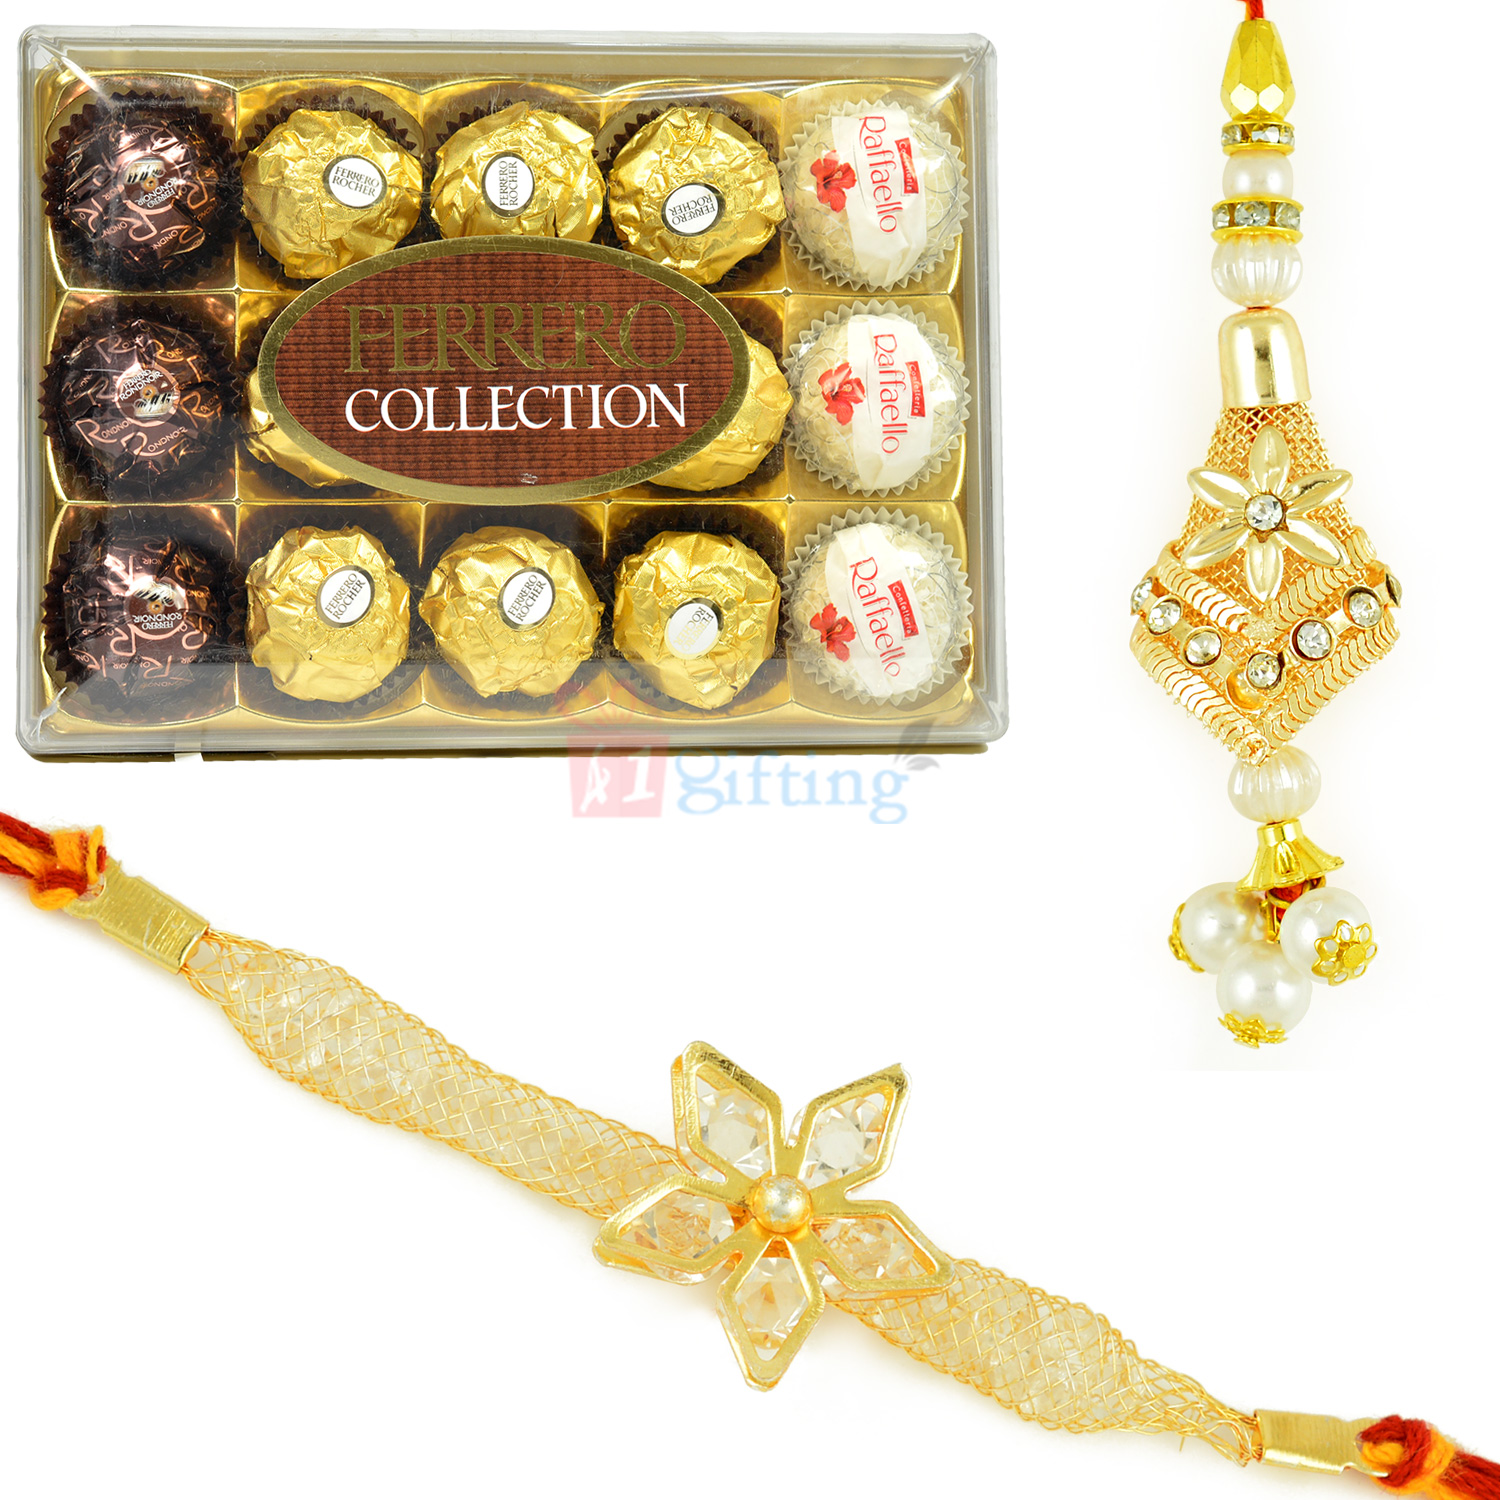 T15 Ferrero Chocolate with Wonderful Pair Rakhi Set